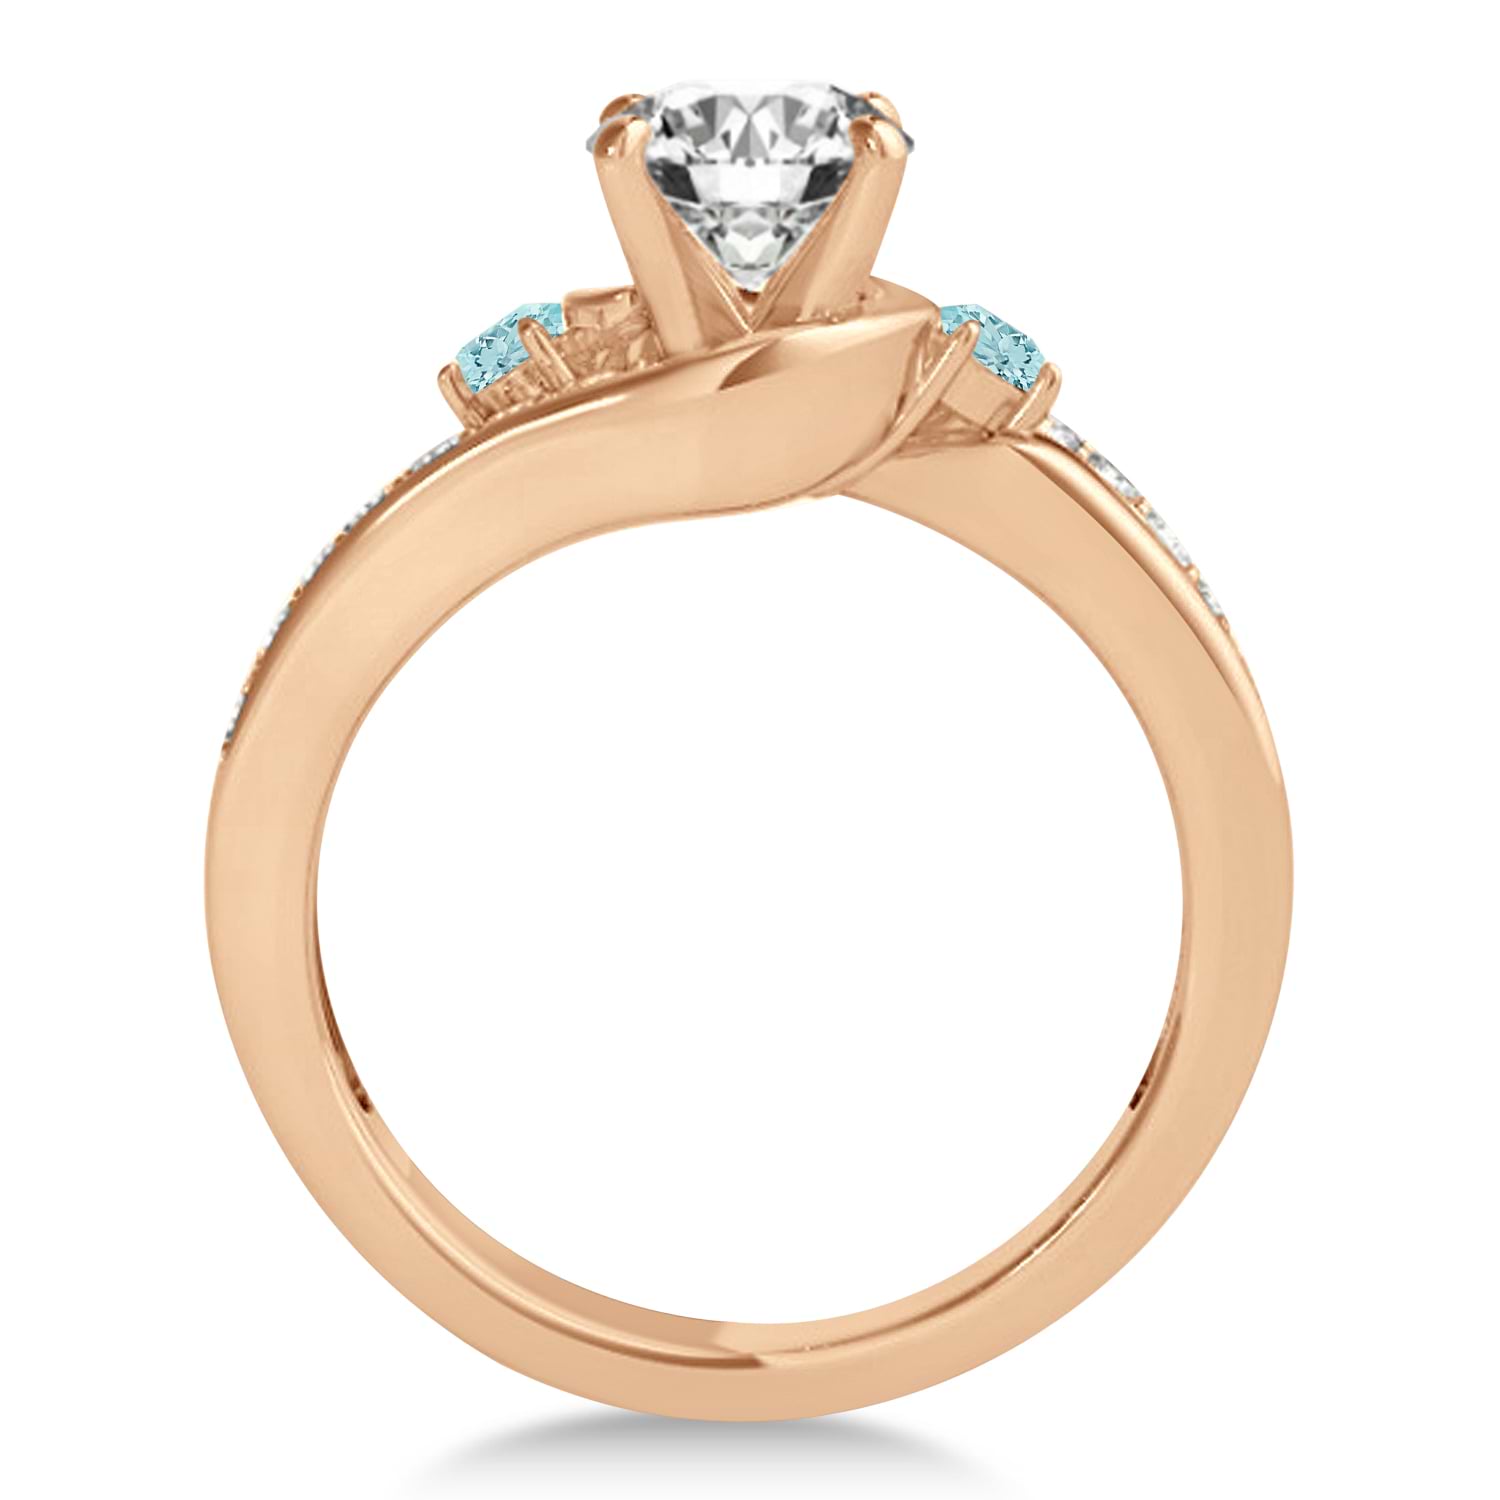 Swirl Design Aquamarine & Diamond Engagement Ring Setting 18k Rose Gold 0.38ct